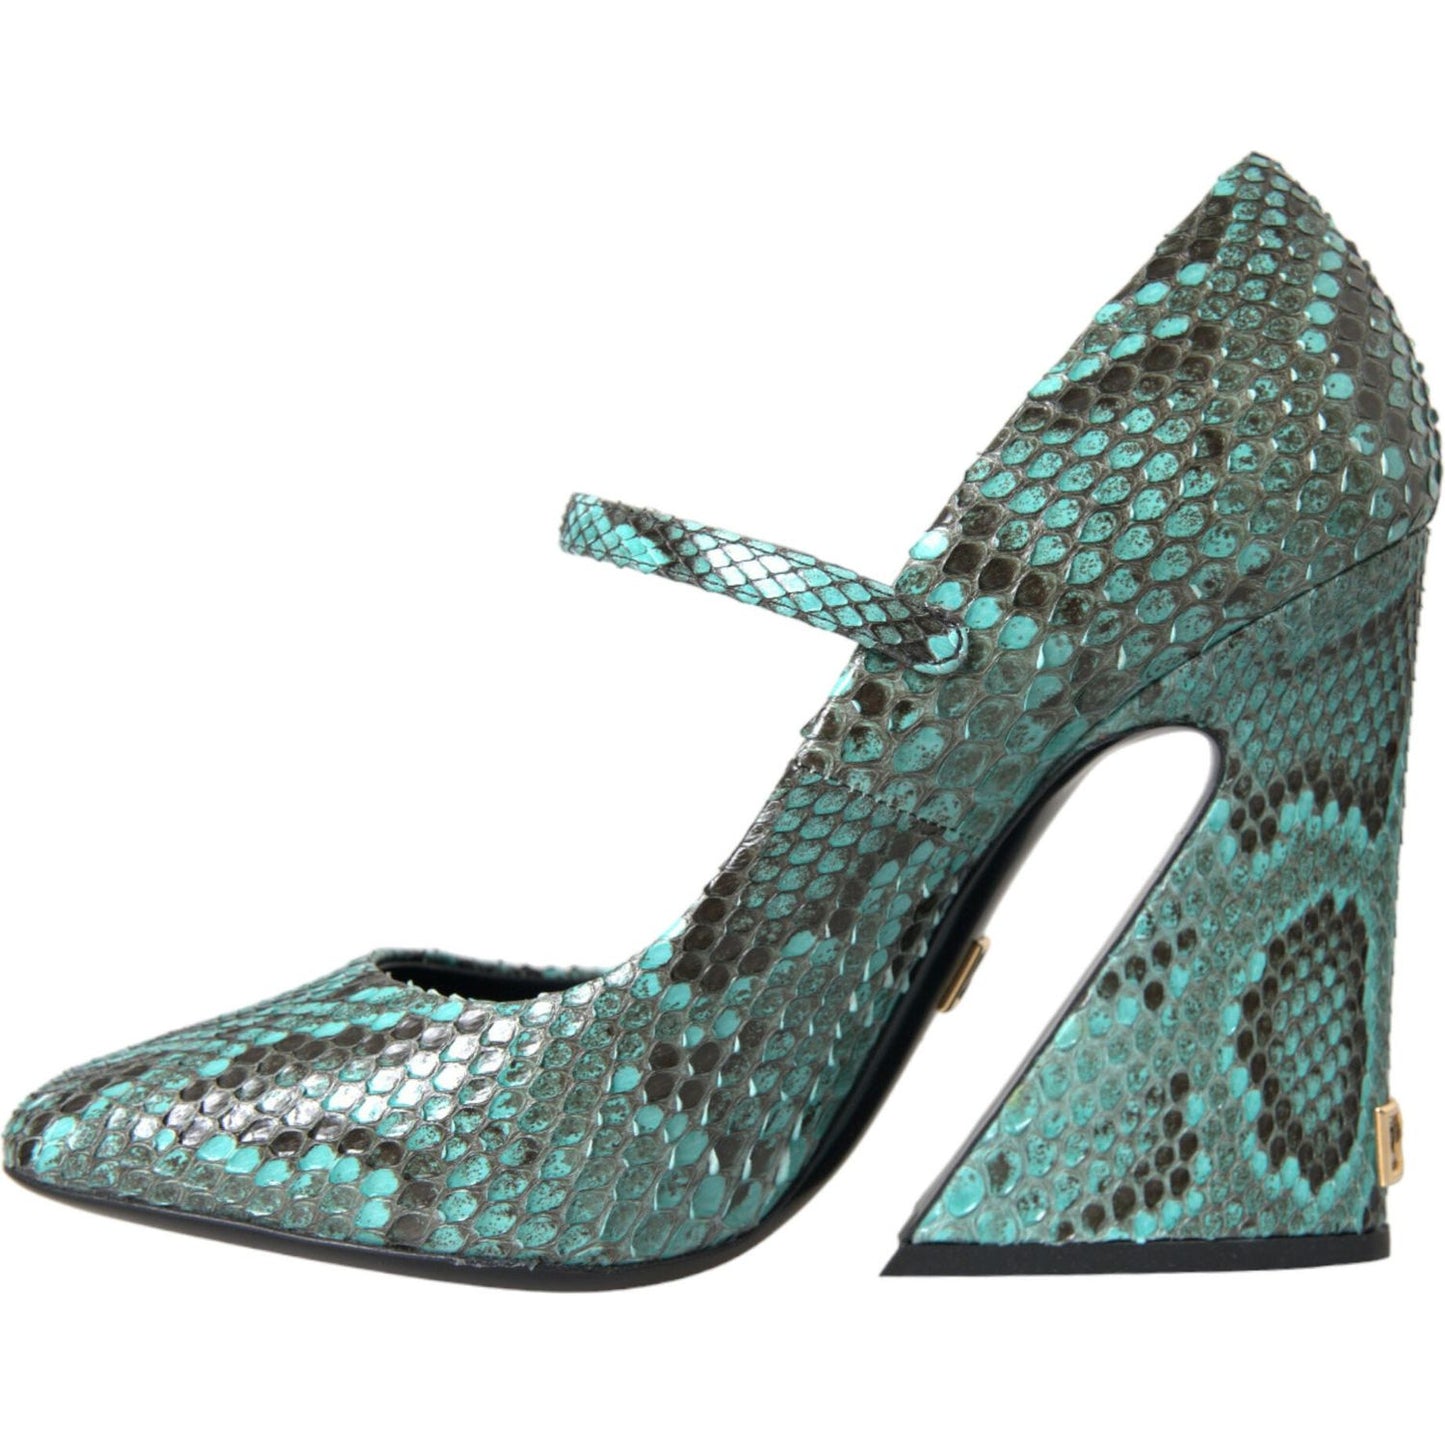 Dolce & Gabbana Aqua Python Leather Mary Jane Pumps Shoes aqua-python-leather-mary-jane-pumps-shoes